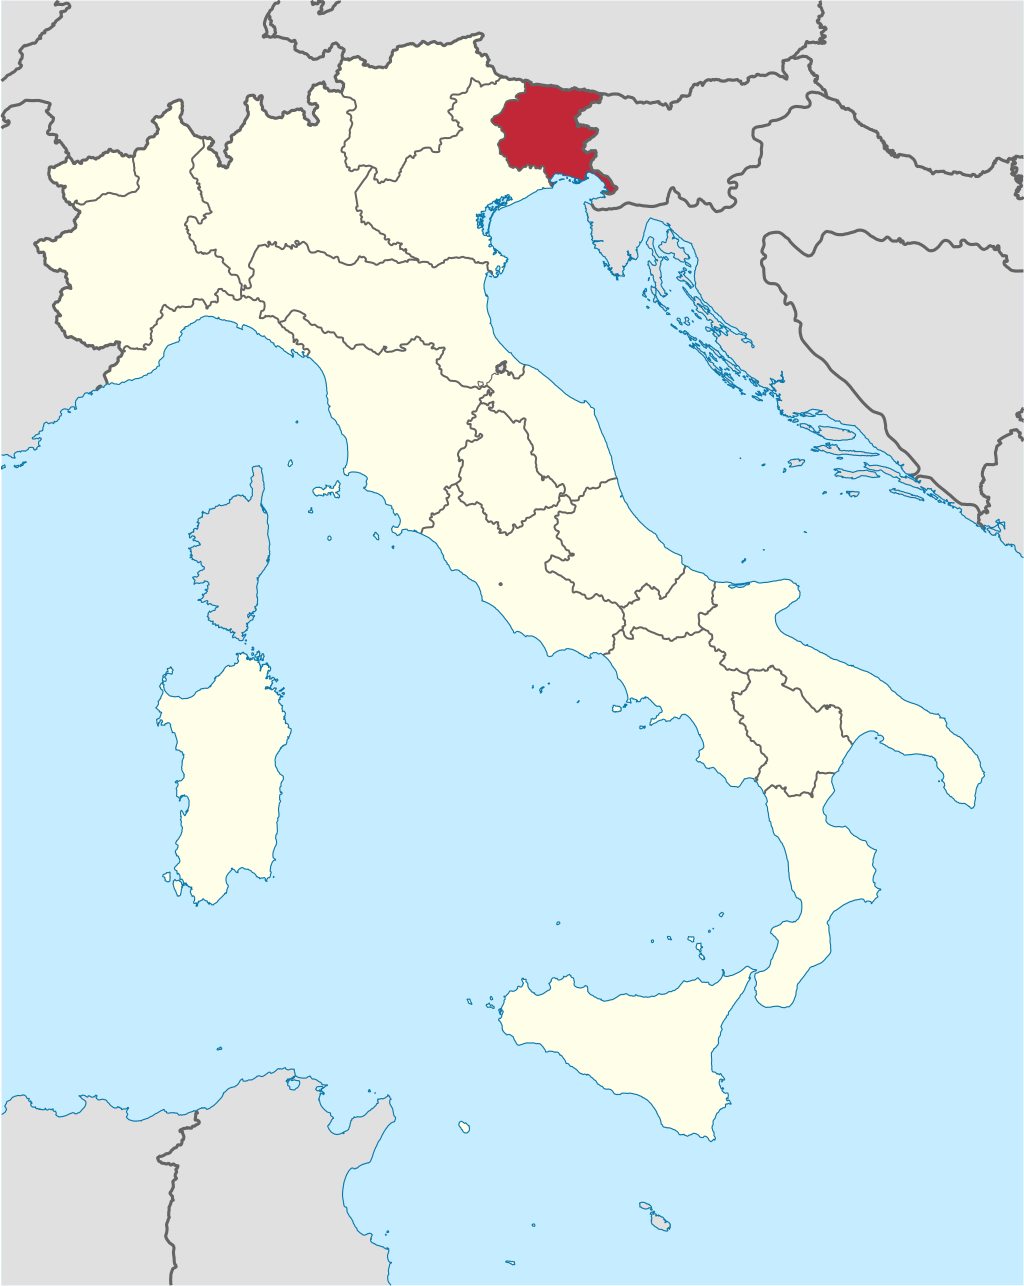 Church Hands Of Go Urbex location or around the region Friuli-Venezia Giulia (Province of Udine), Italy